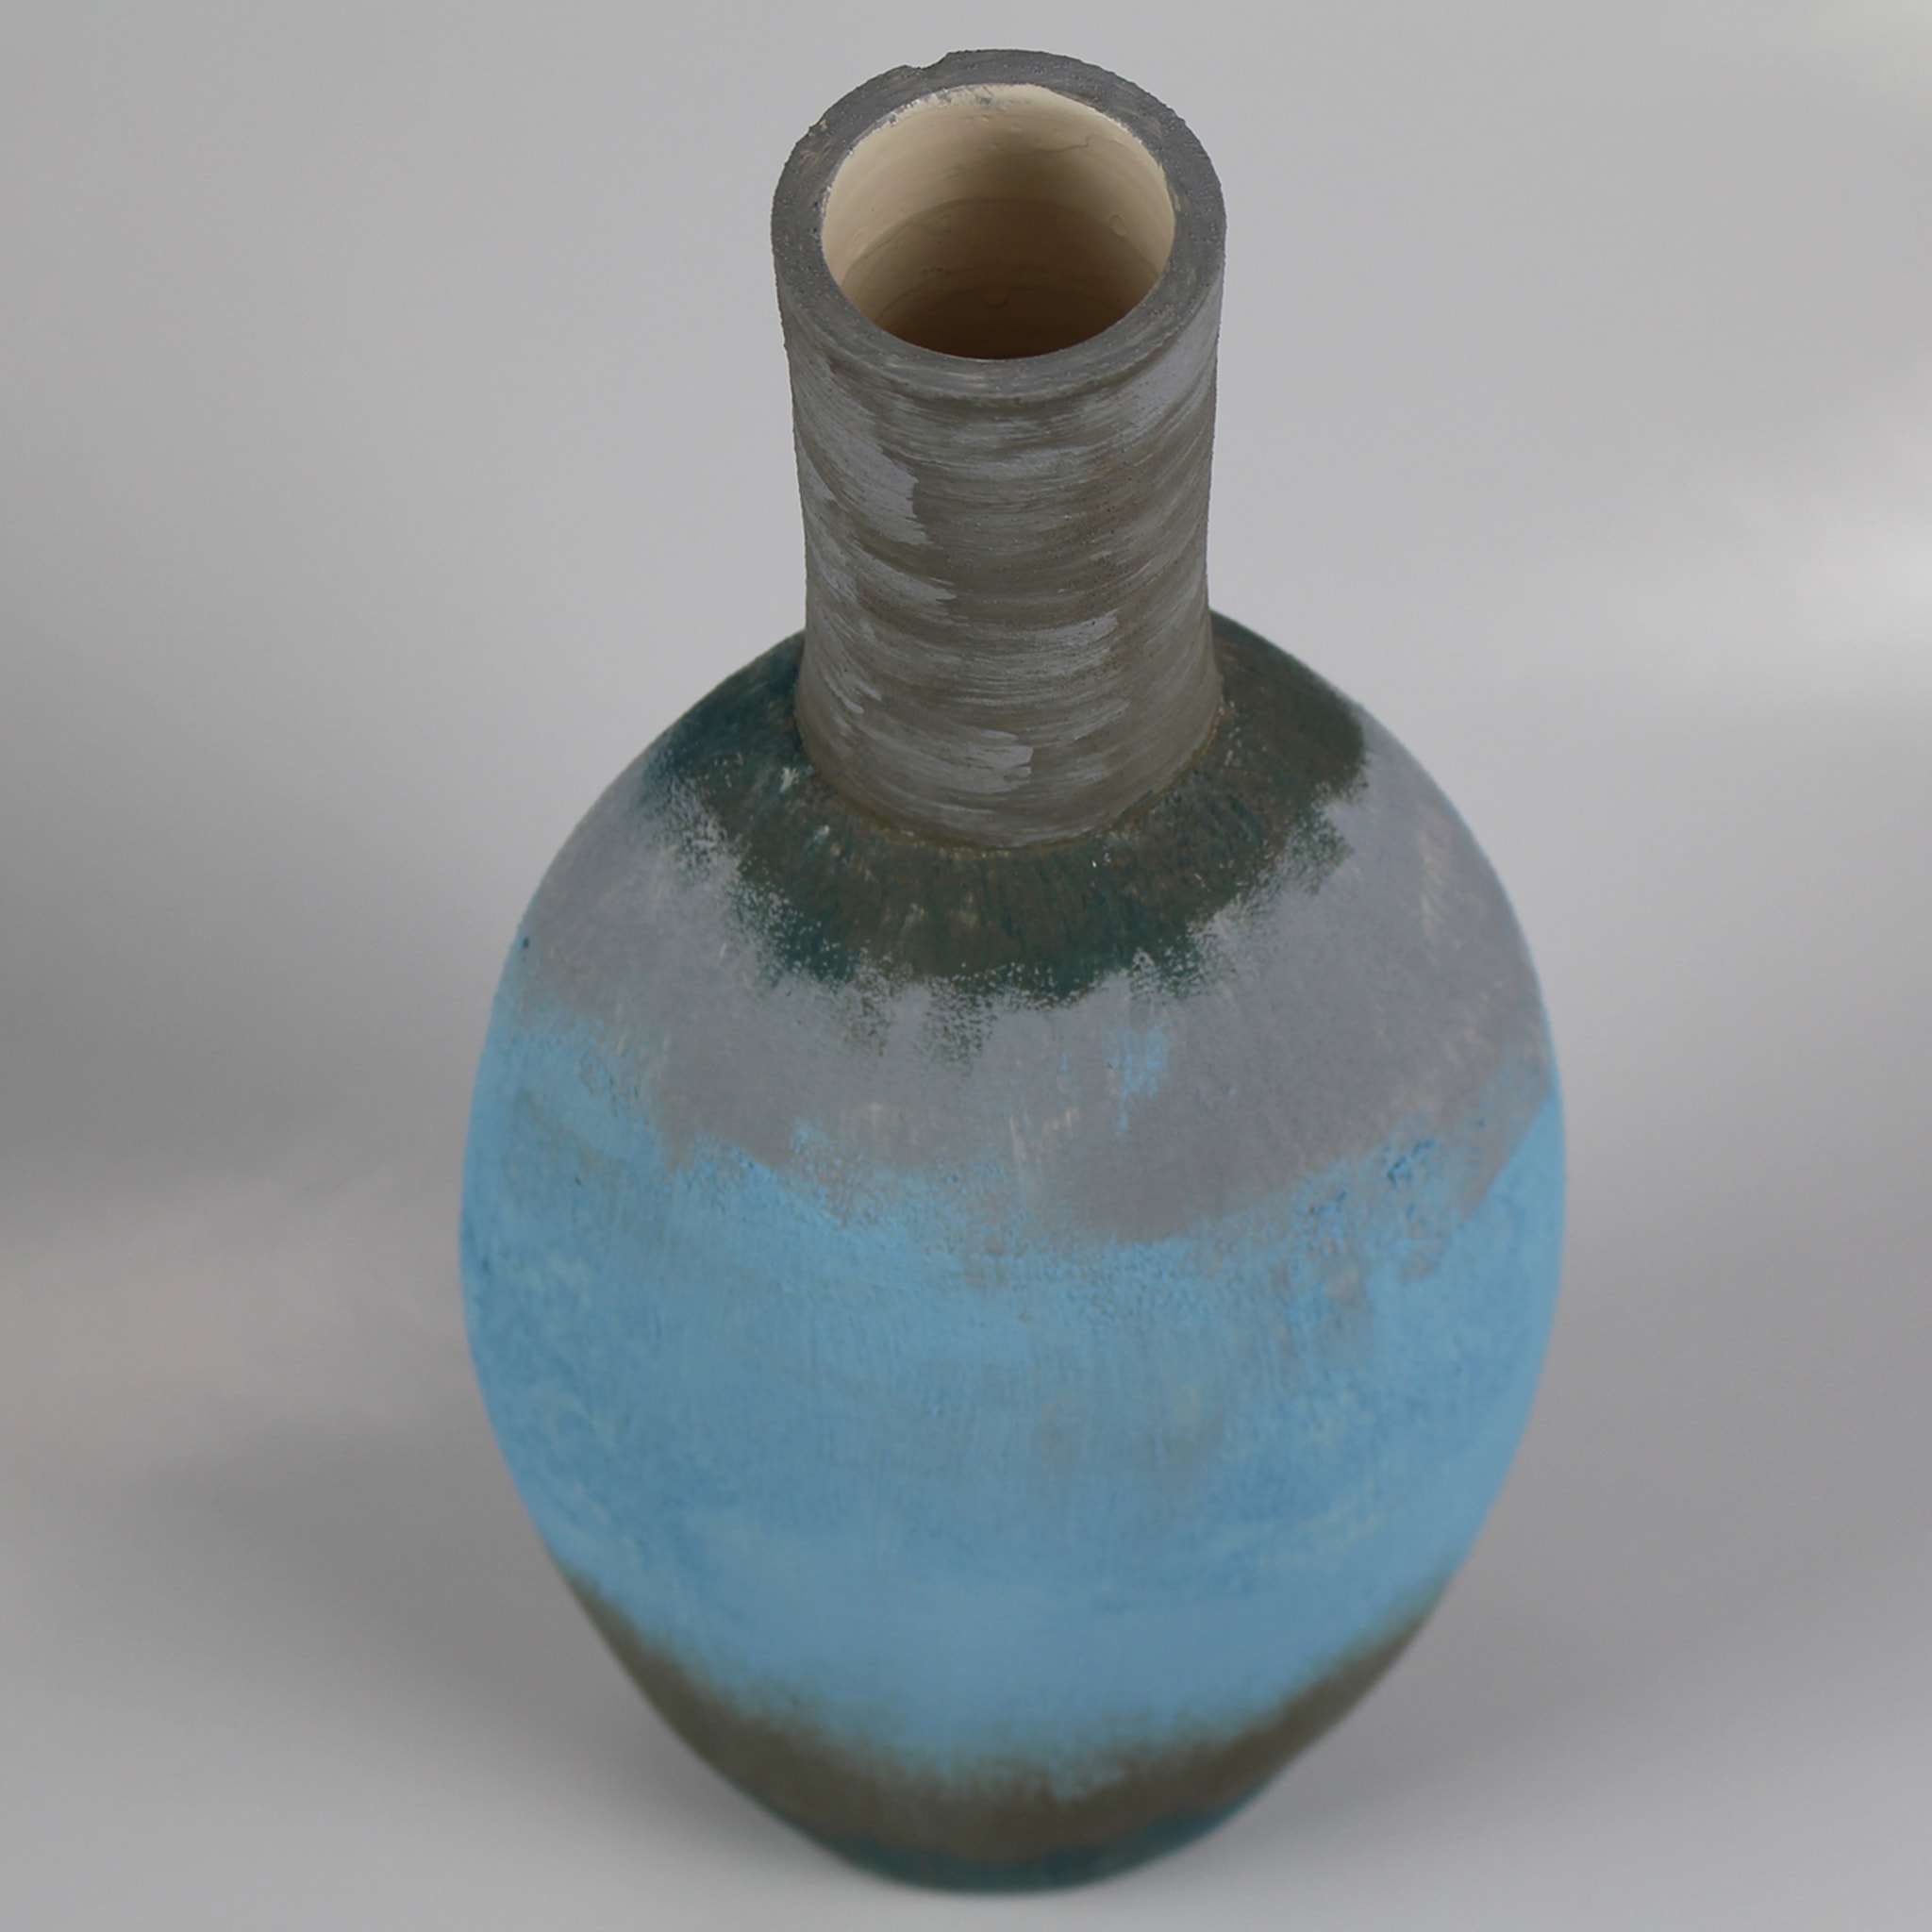 Bulging Light-Blue, Gray, Green Vase 13 by Mascia Meccani - Alternative view 2